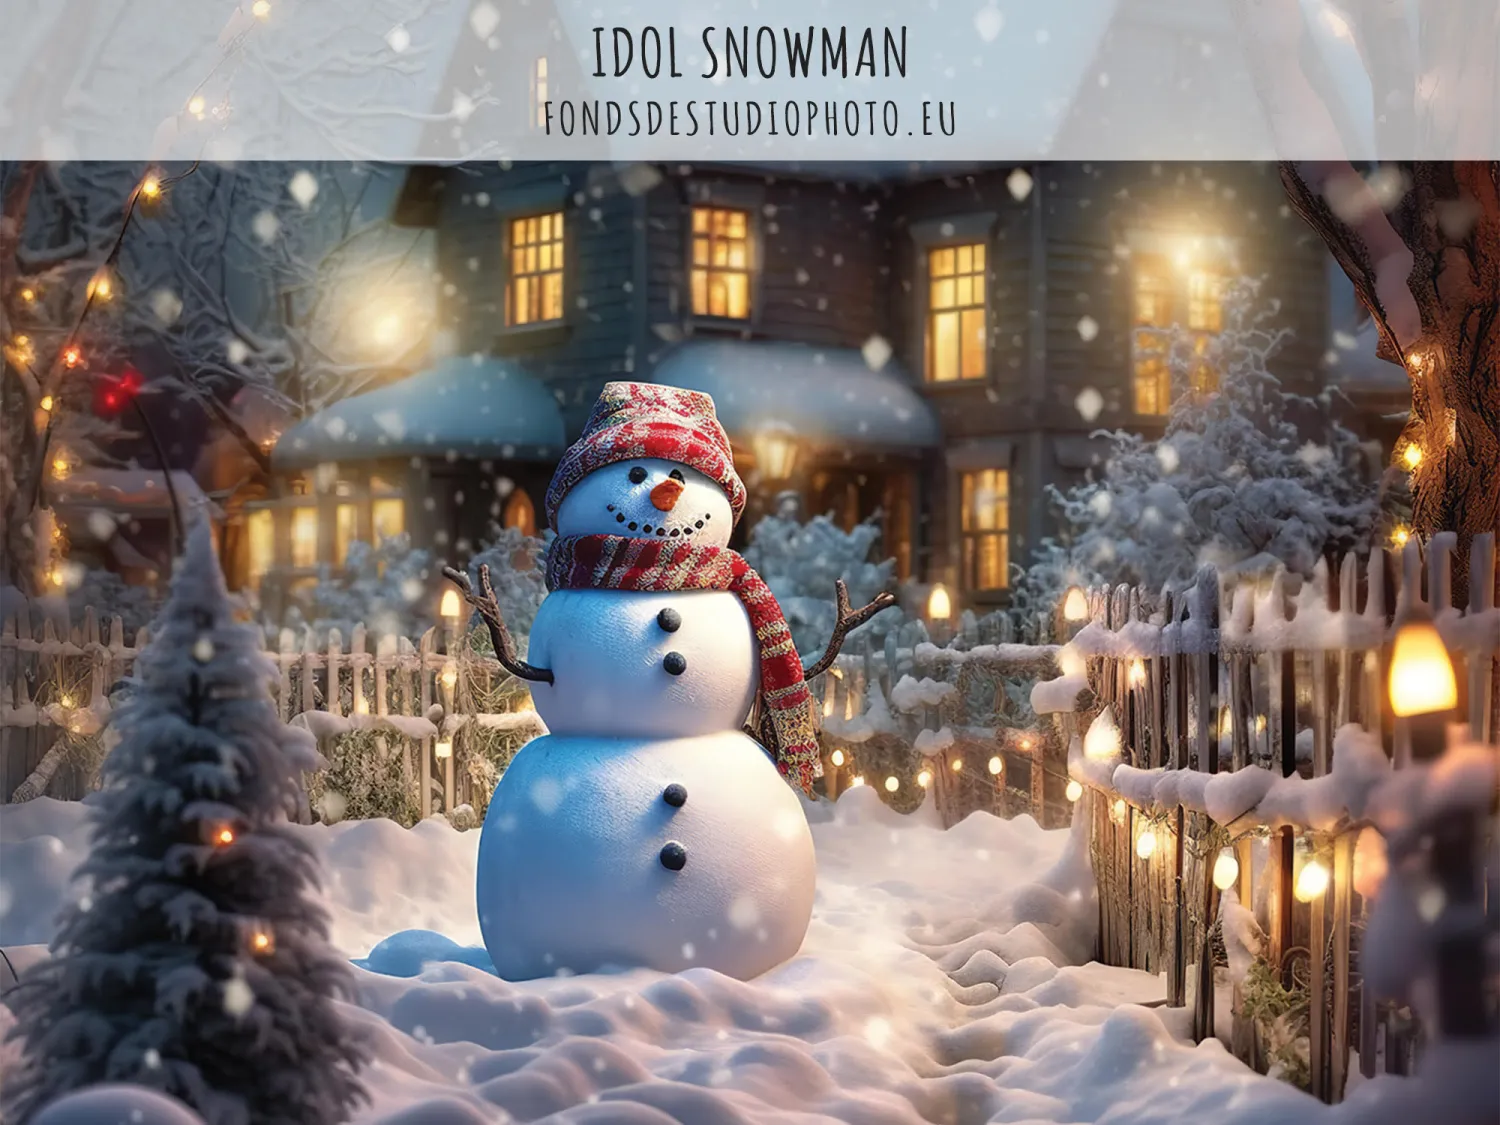 Idol Snowman